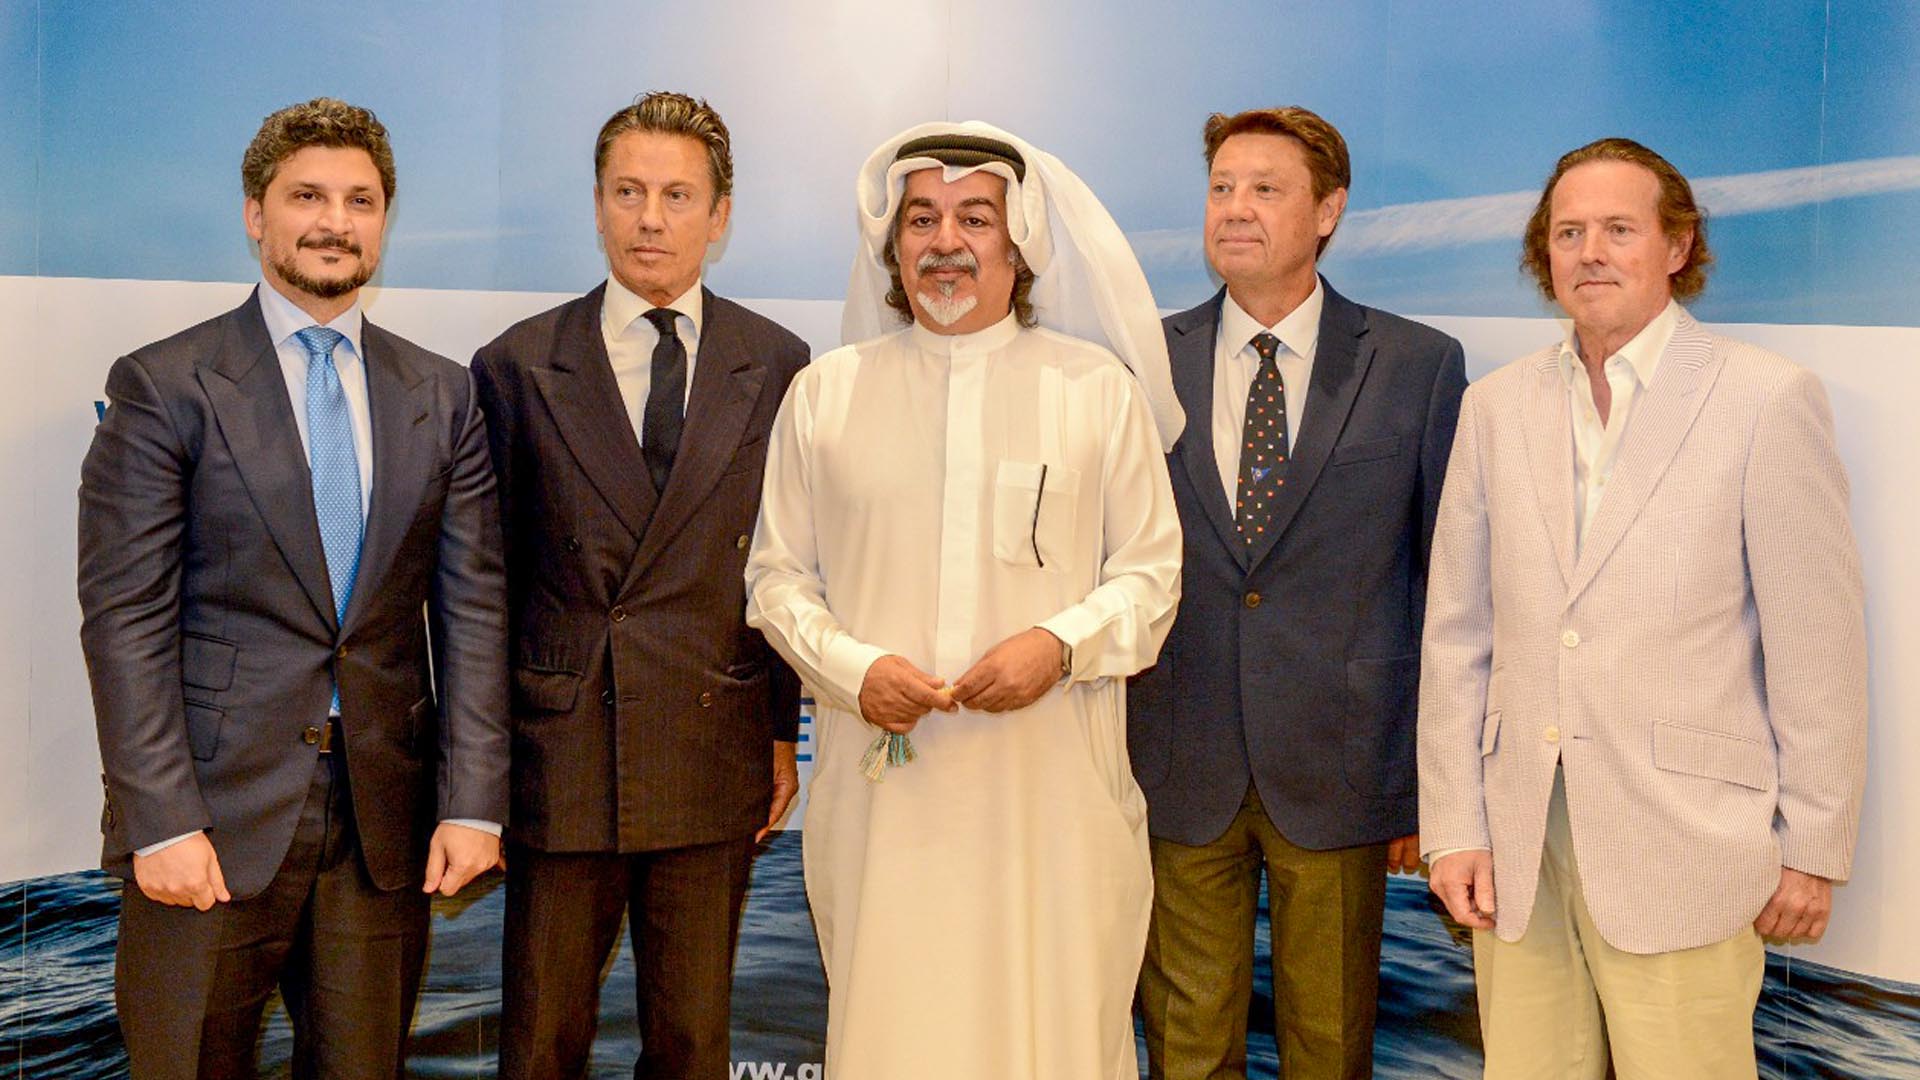 Abu Dhabi creates sporting history by securing Cowes Week sailing regatta 2023